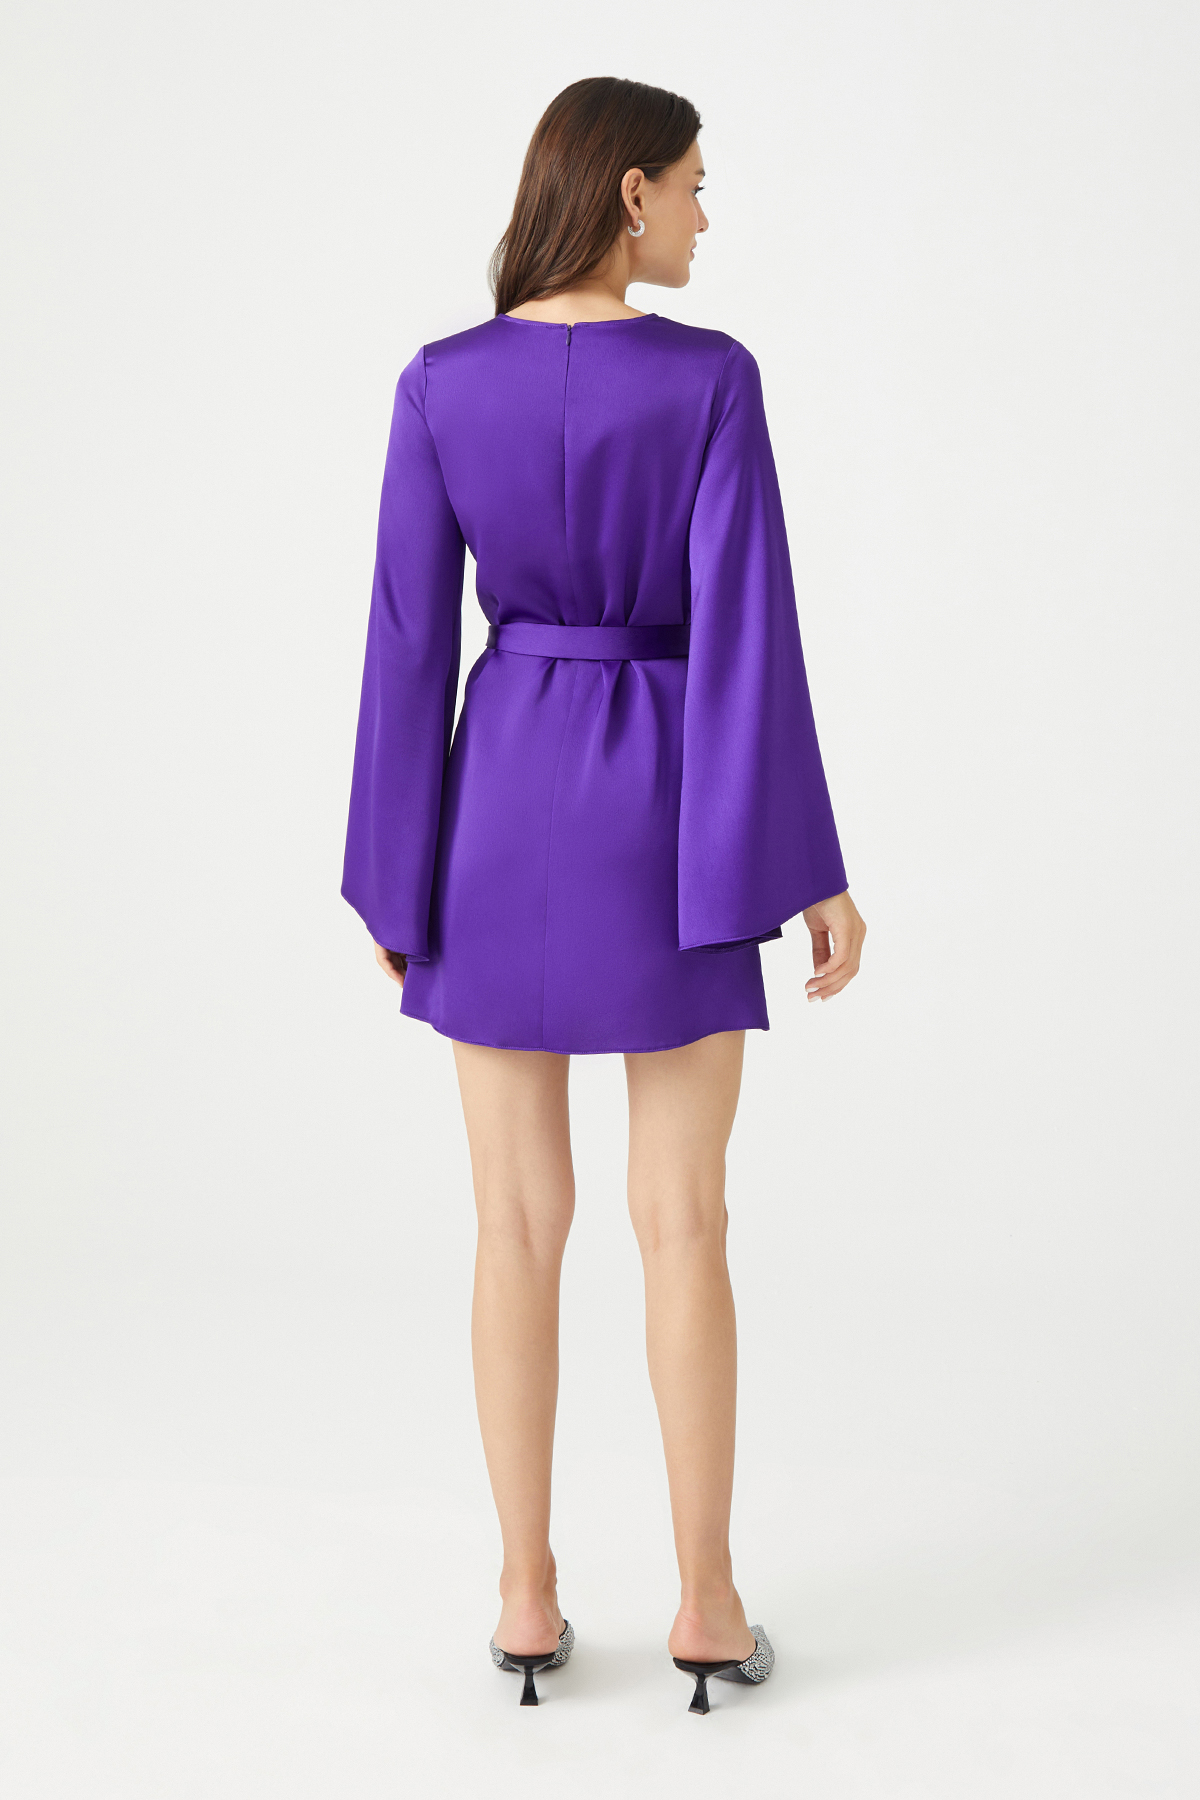 EMILY Bell Sleeve Mini Purple Satin Dress